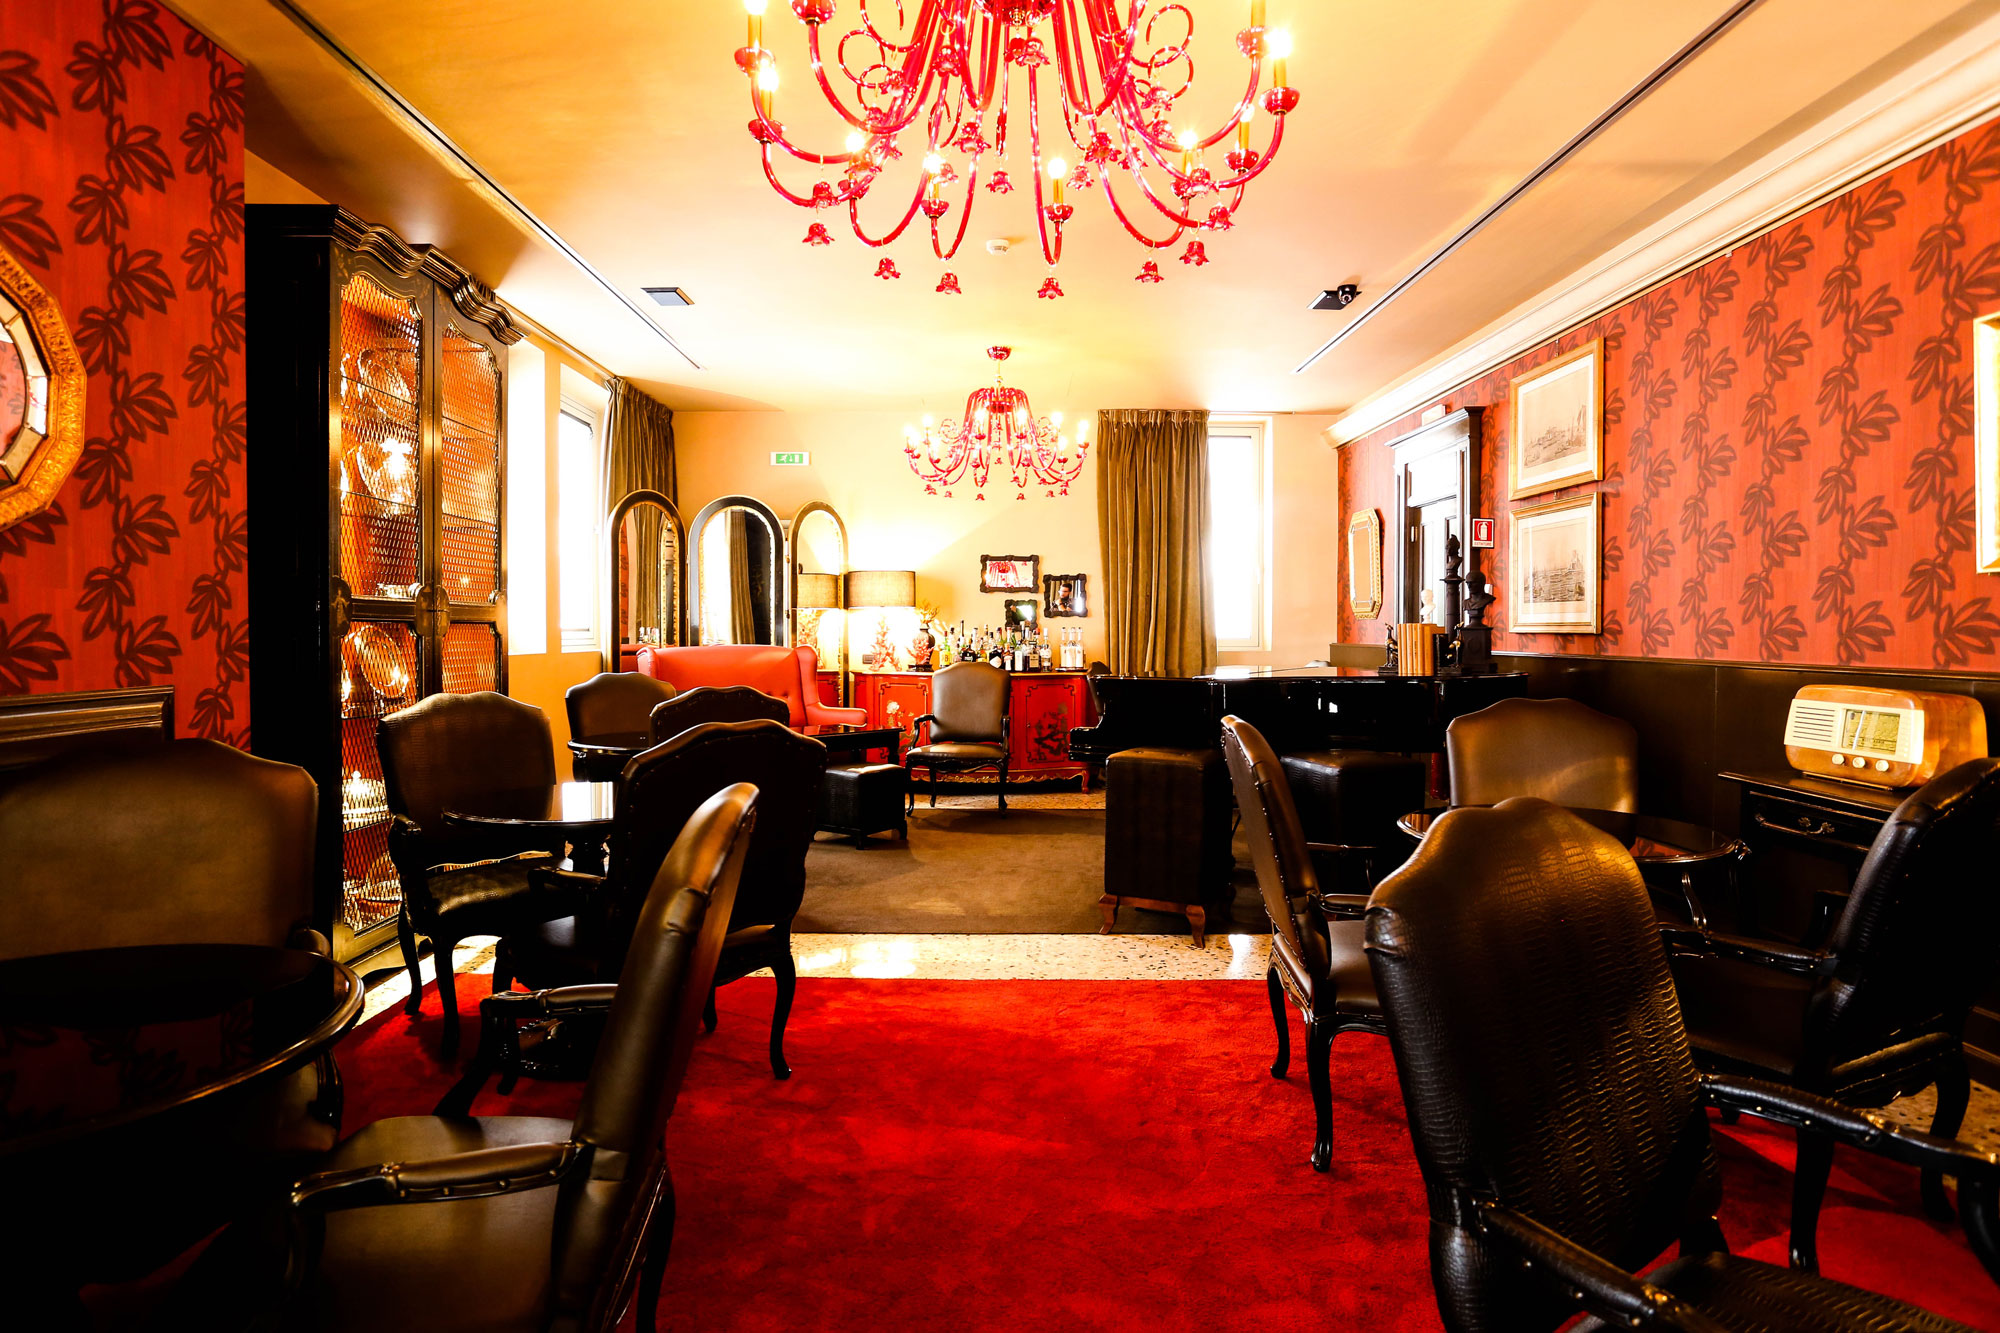 Il made in Italy di Bertelè veste i lounge bar di due eleganti boutique hotel